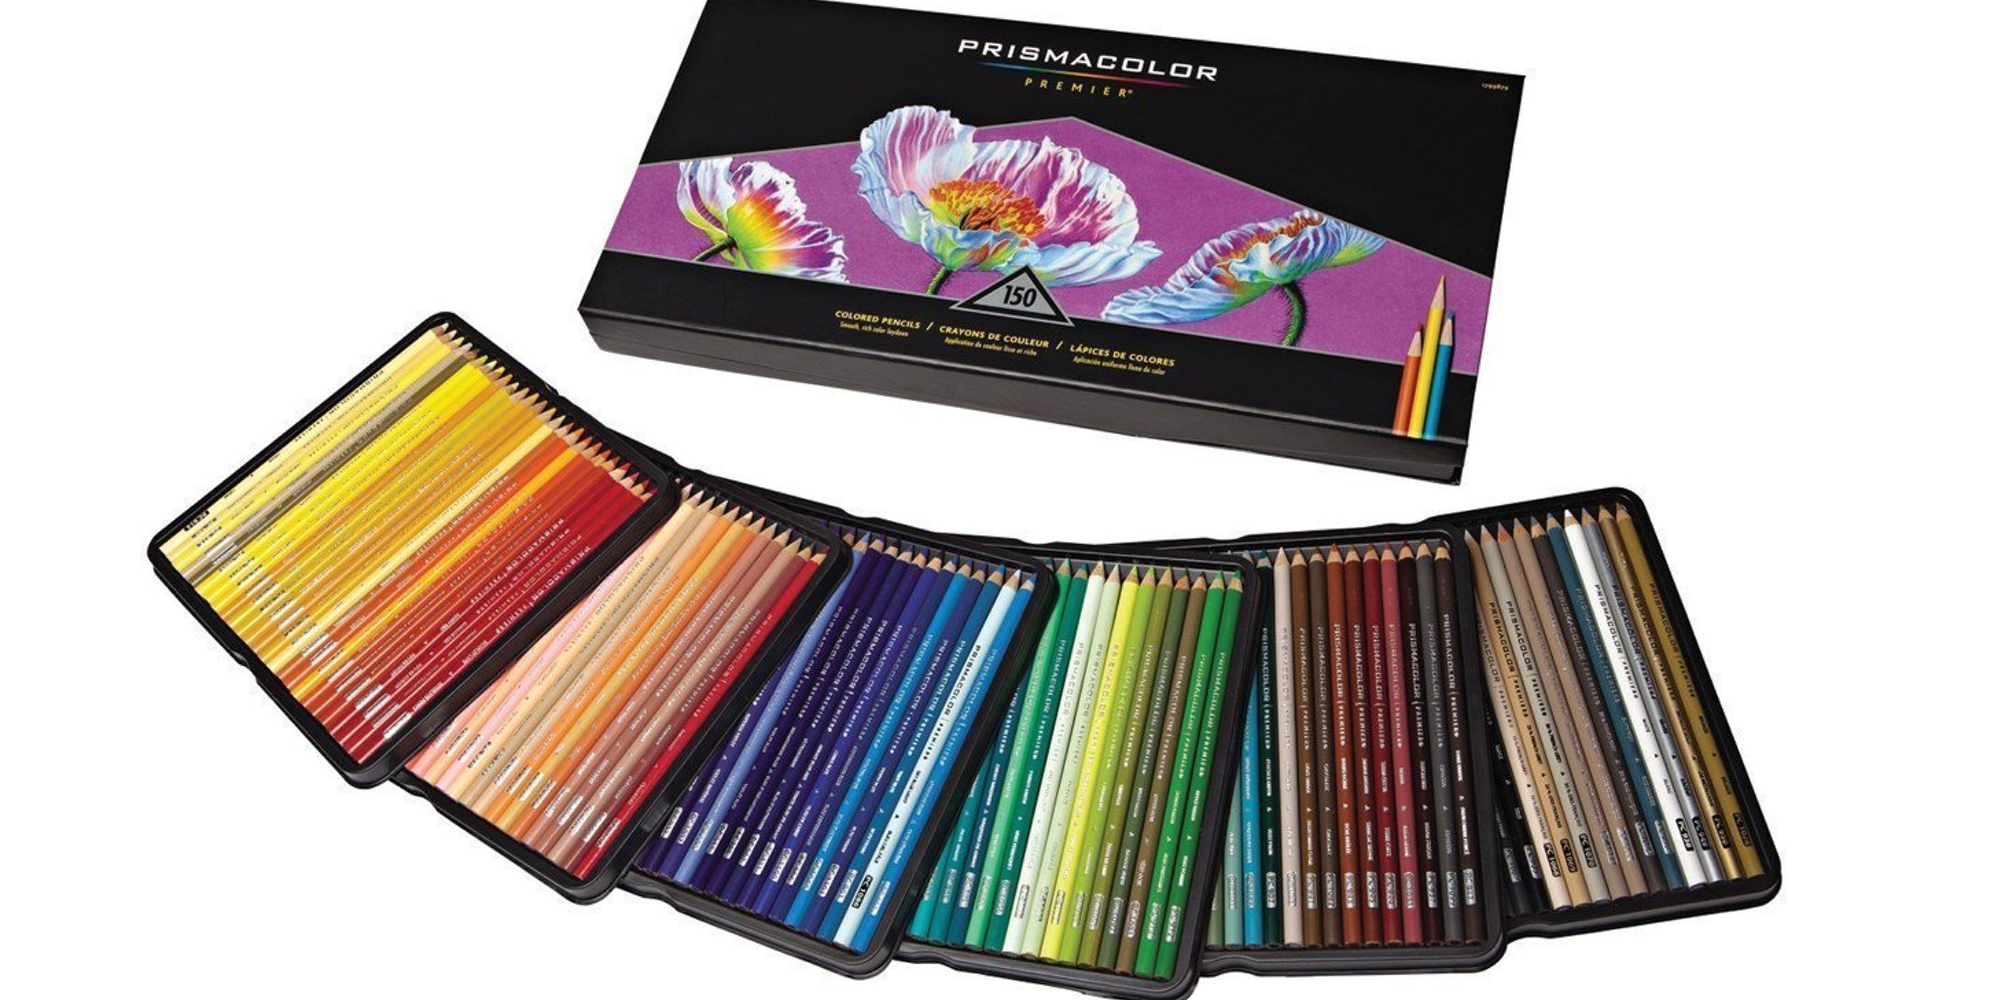 Prismacolor Premier Colored Pencils 150count for 59 shipped (Reg. 84